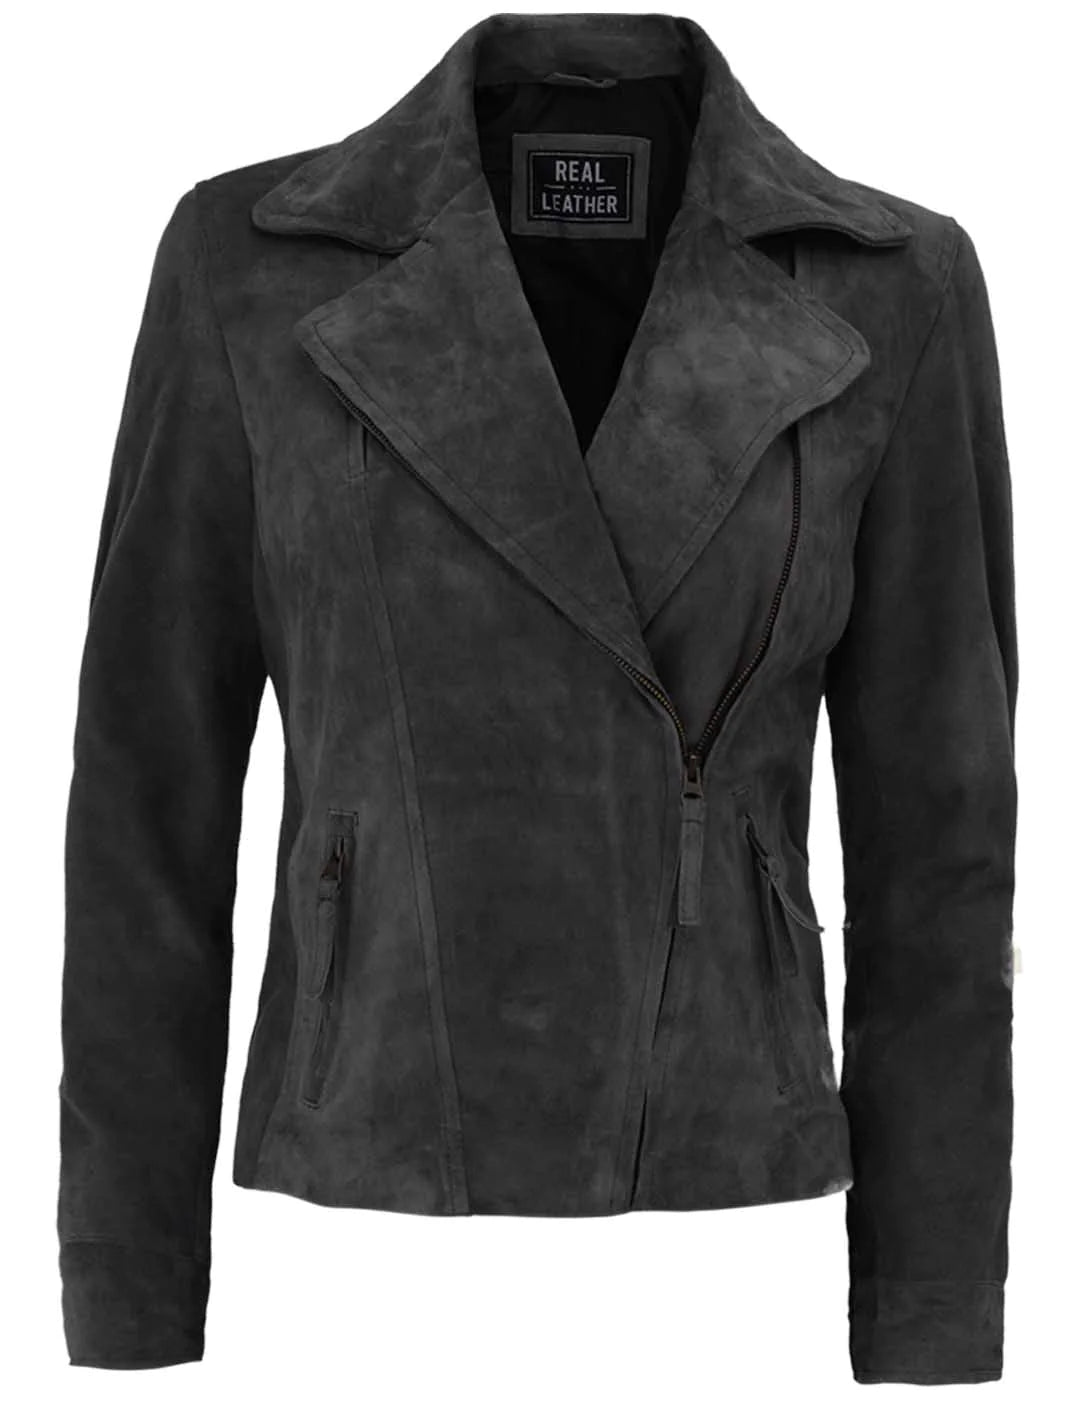 Furioc Asymmetrical Women Suede Leather Jacket